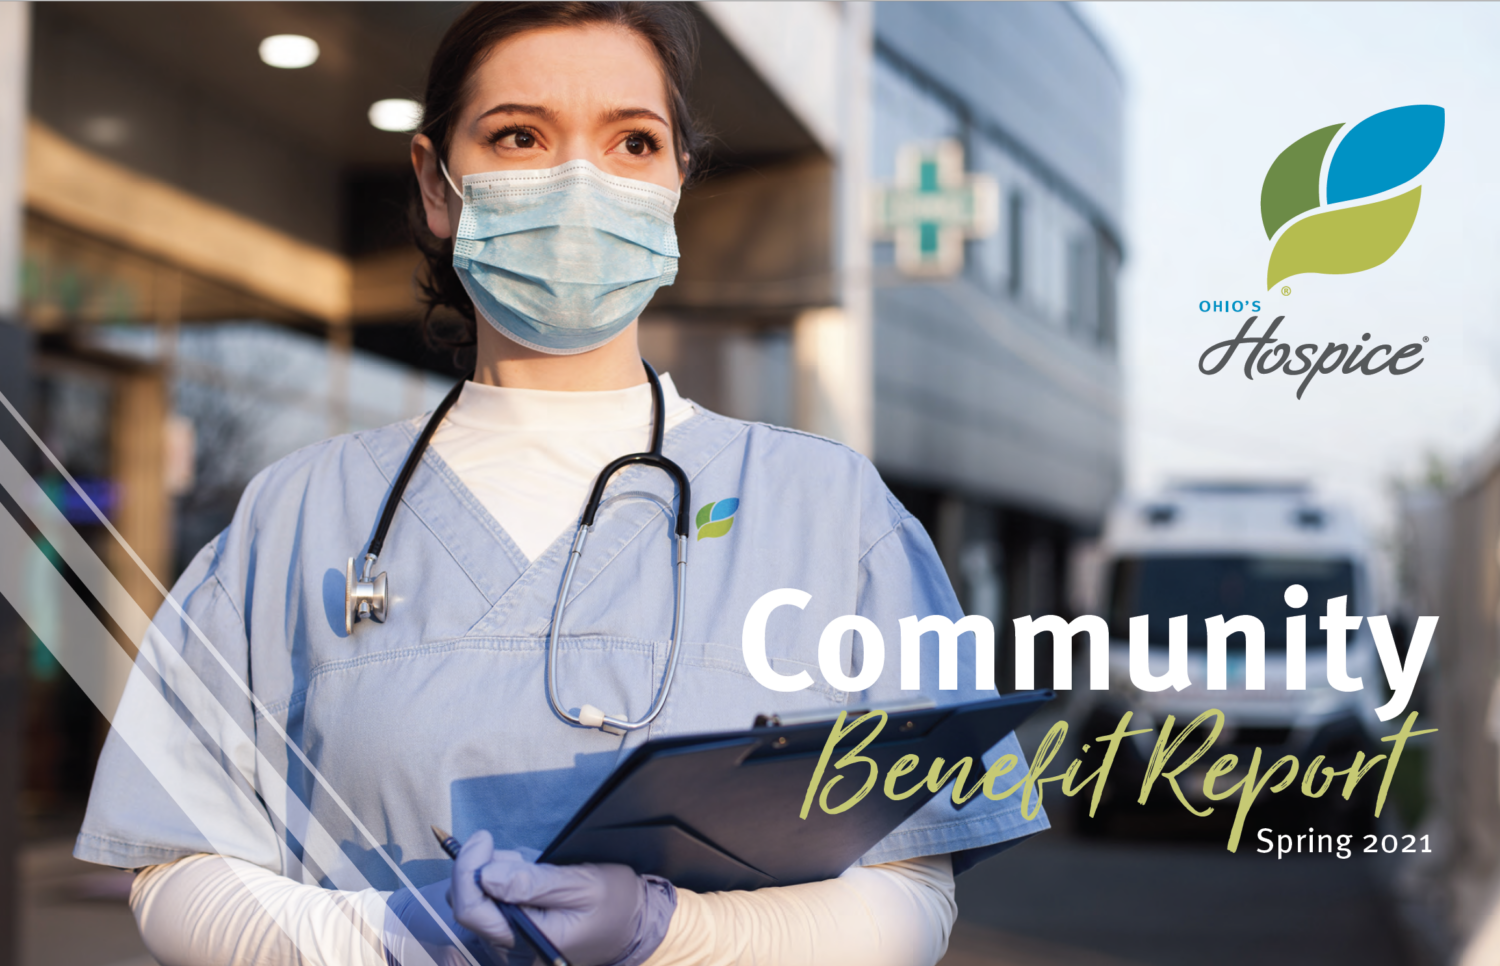 Ohio's Hospice Community Benefit Report 